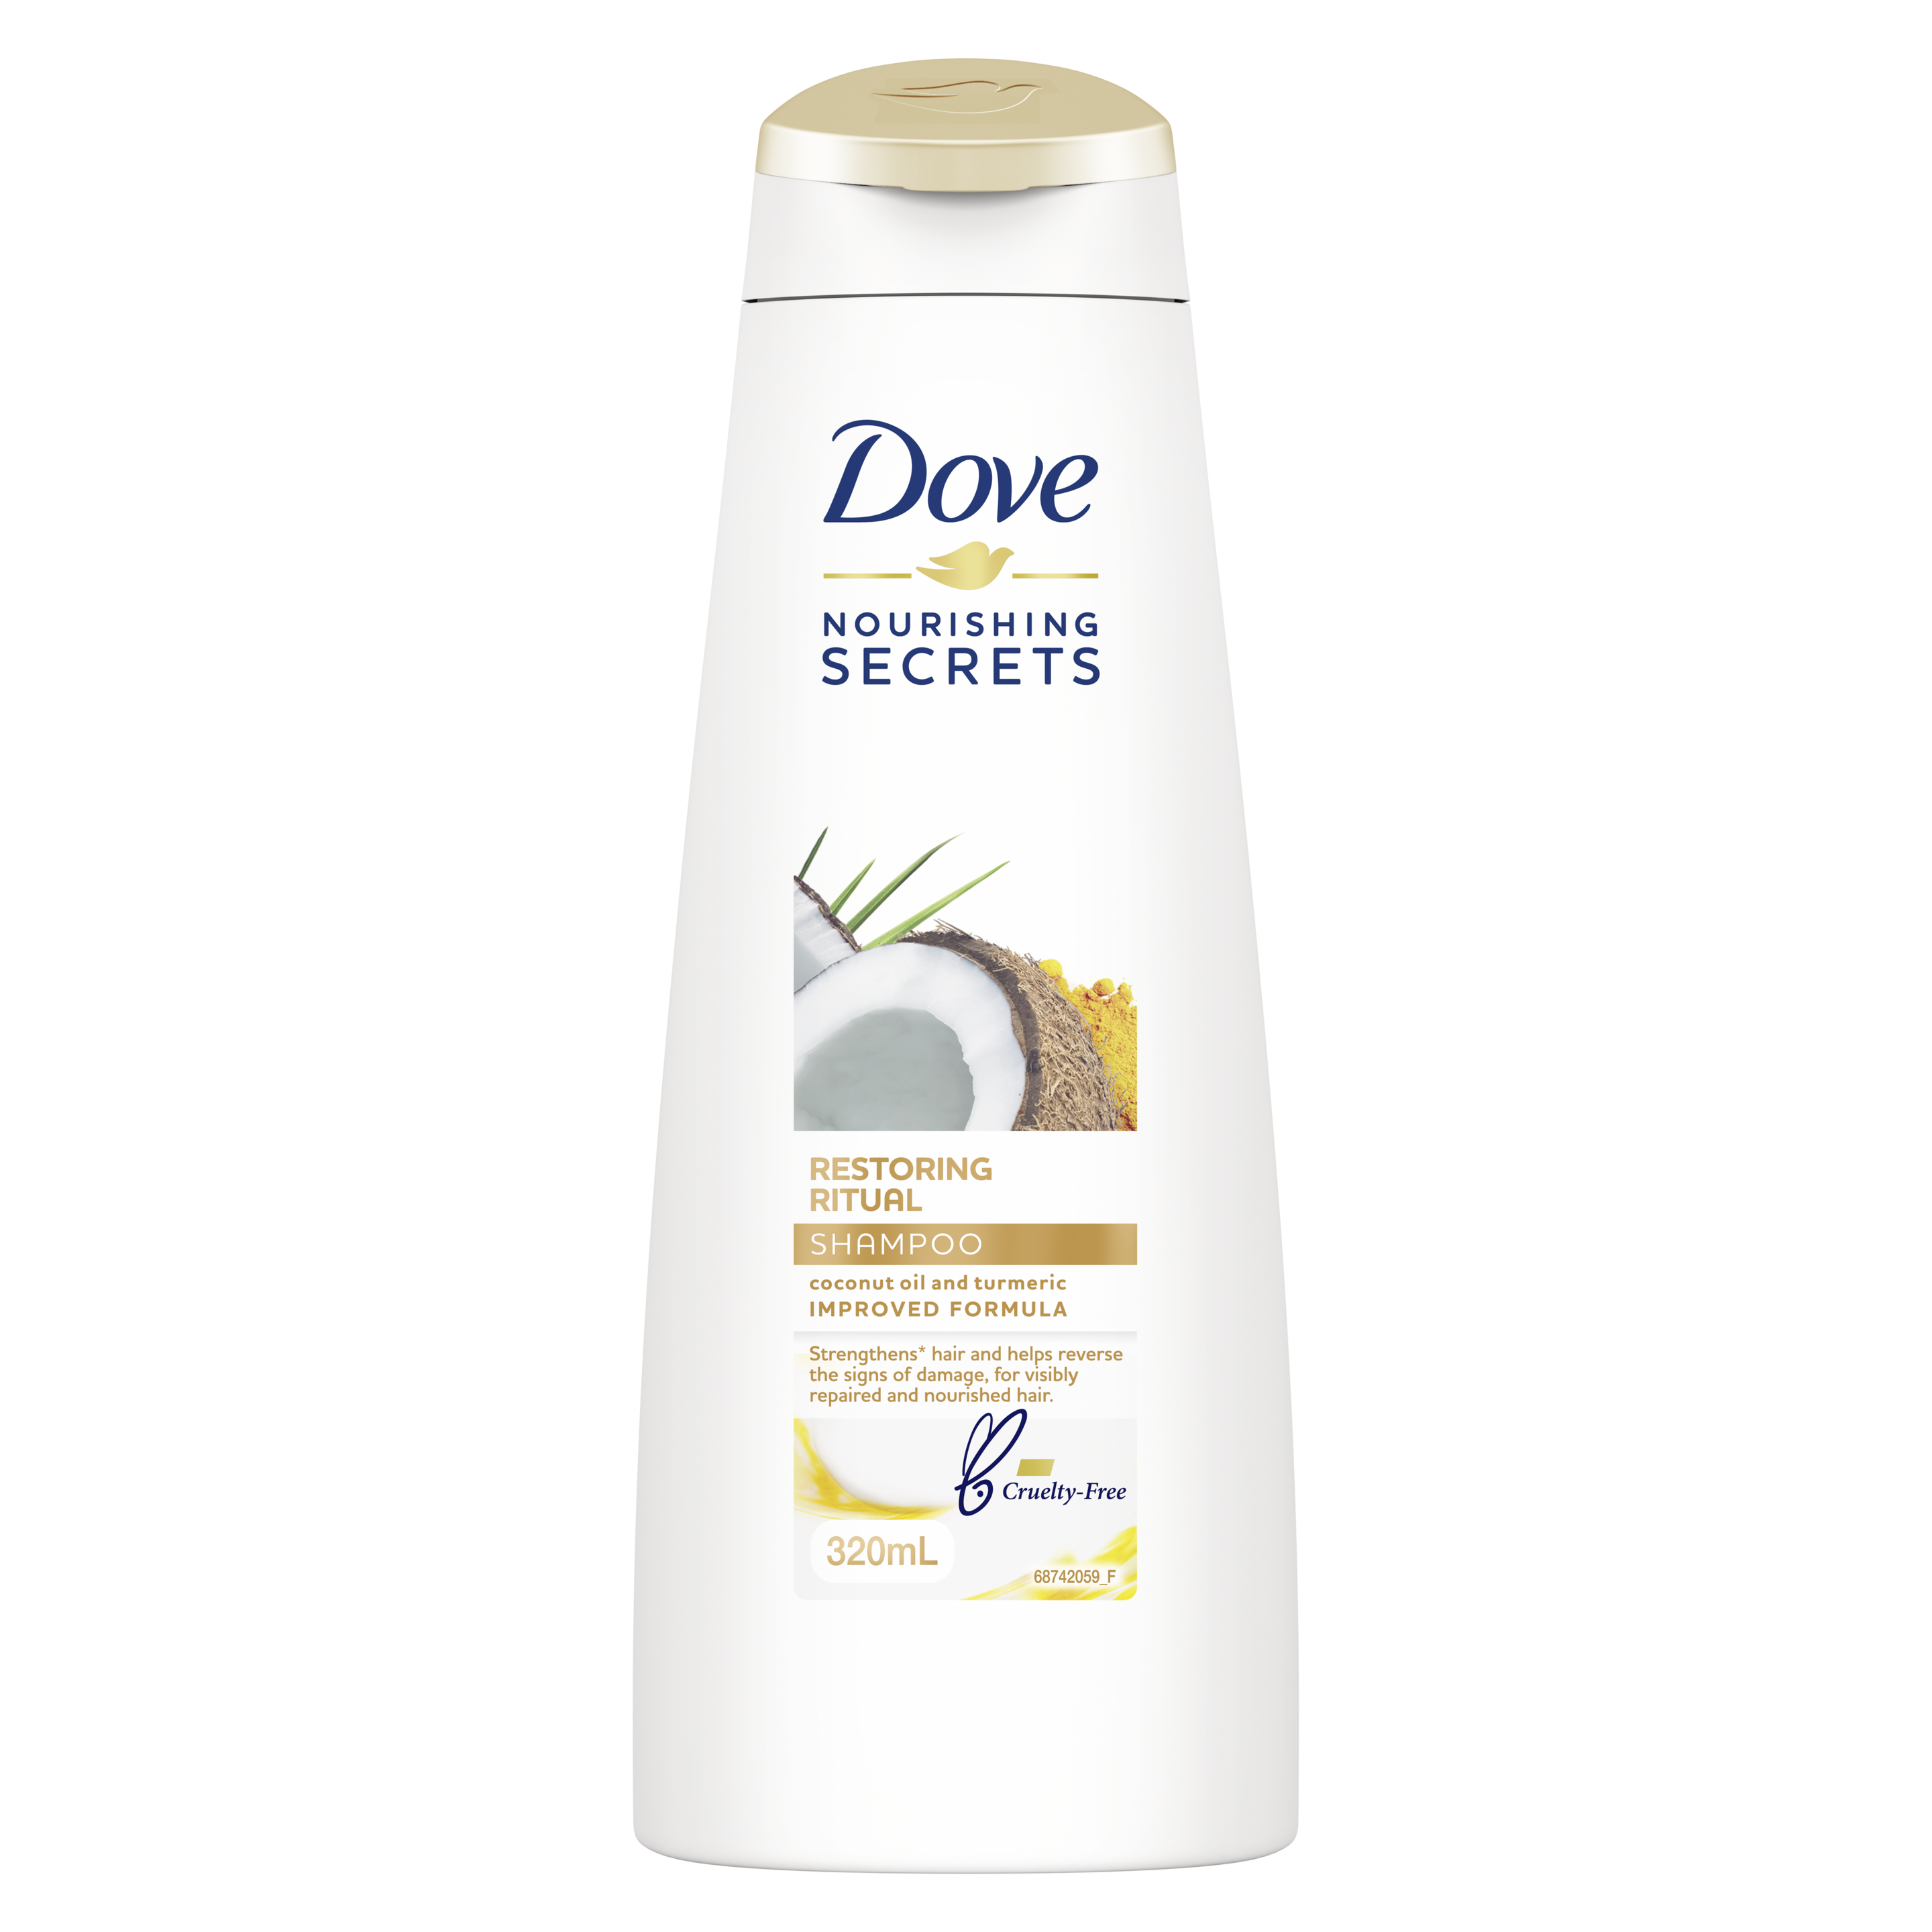 Dove Restoring Ritual Shampoo 320ml Text